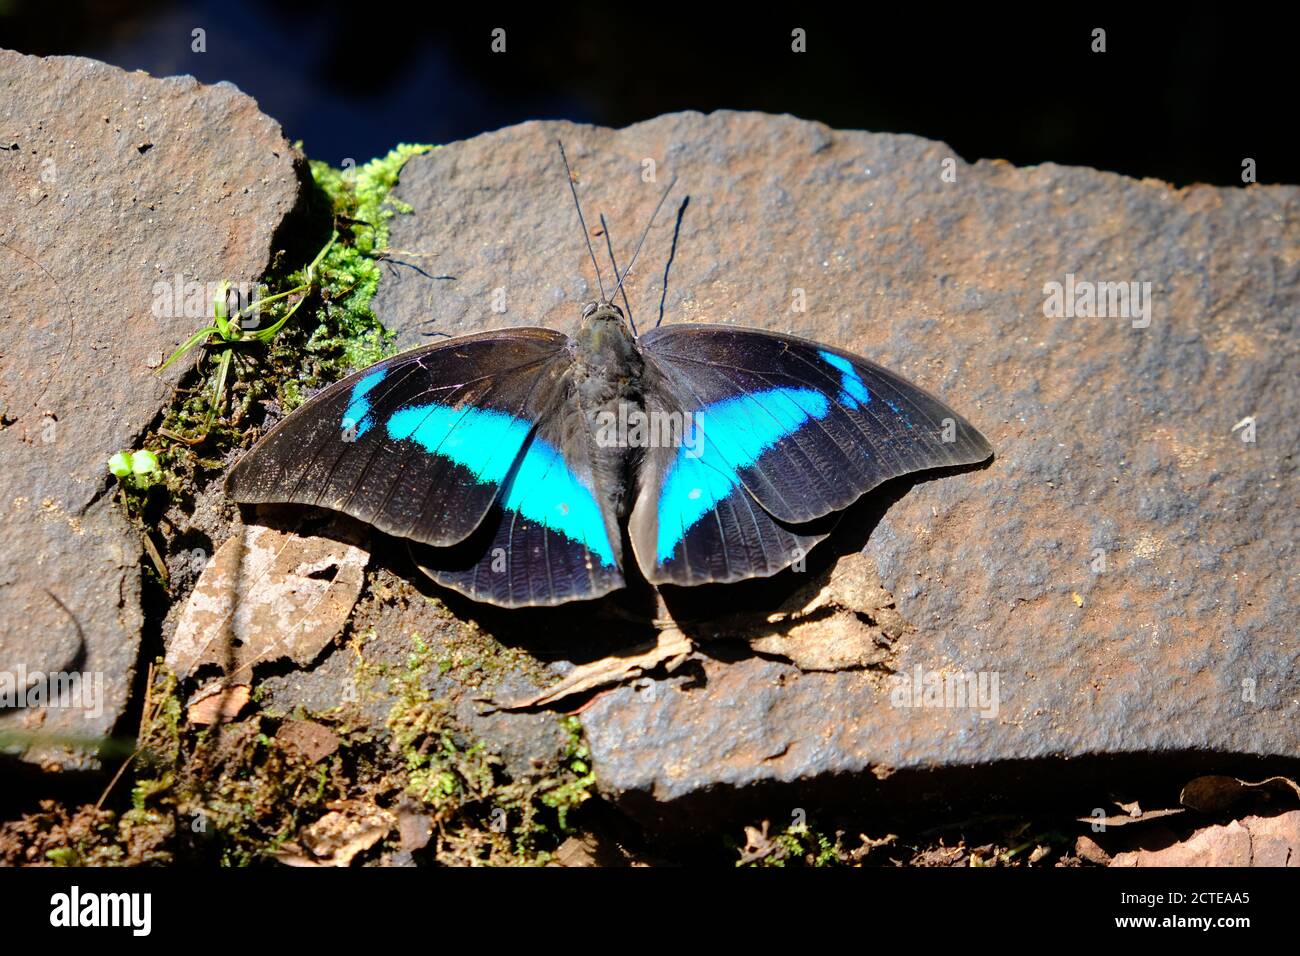 Brazil Foz do Iguacu - Zoo - Parque das Aves Butterfly with bue stripes Stock Photo